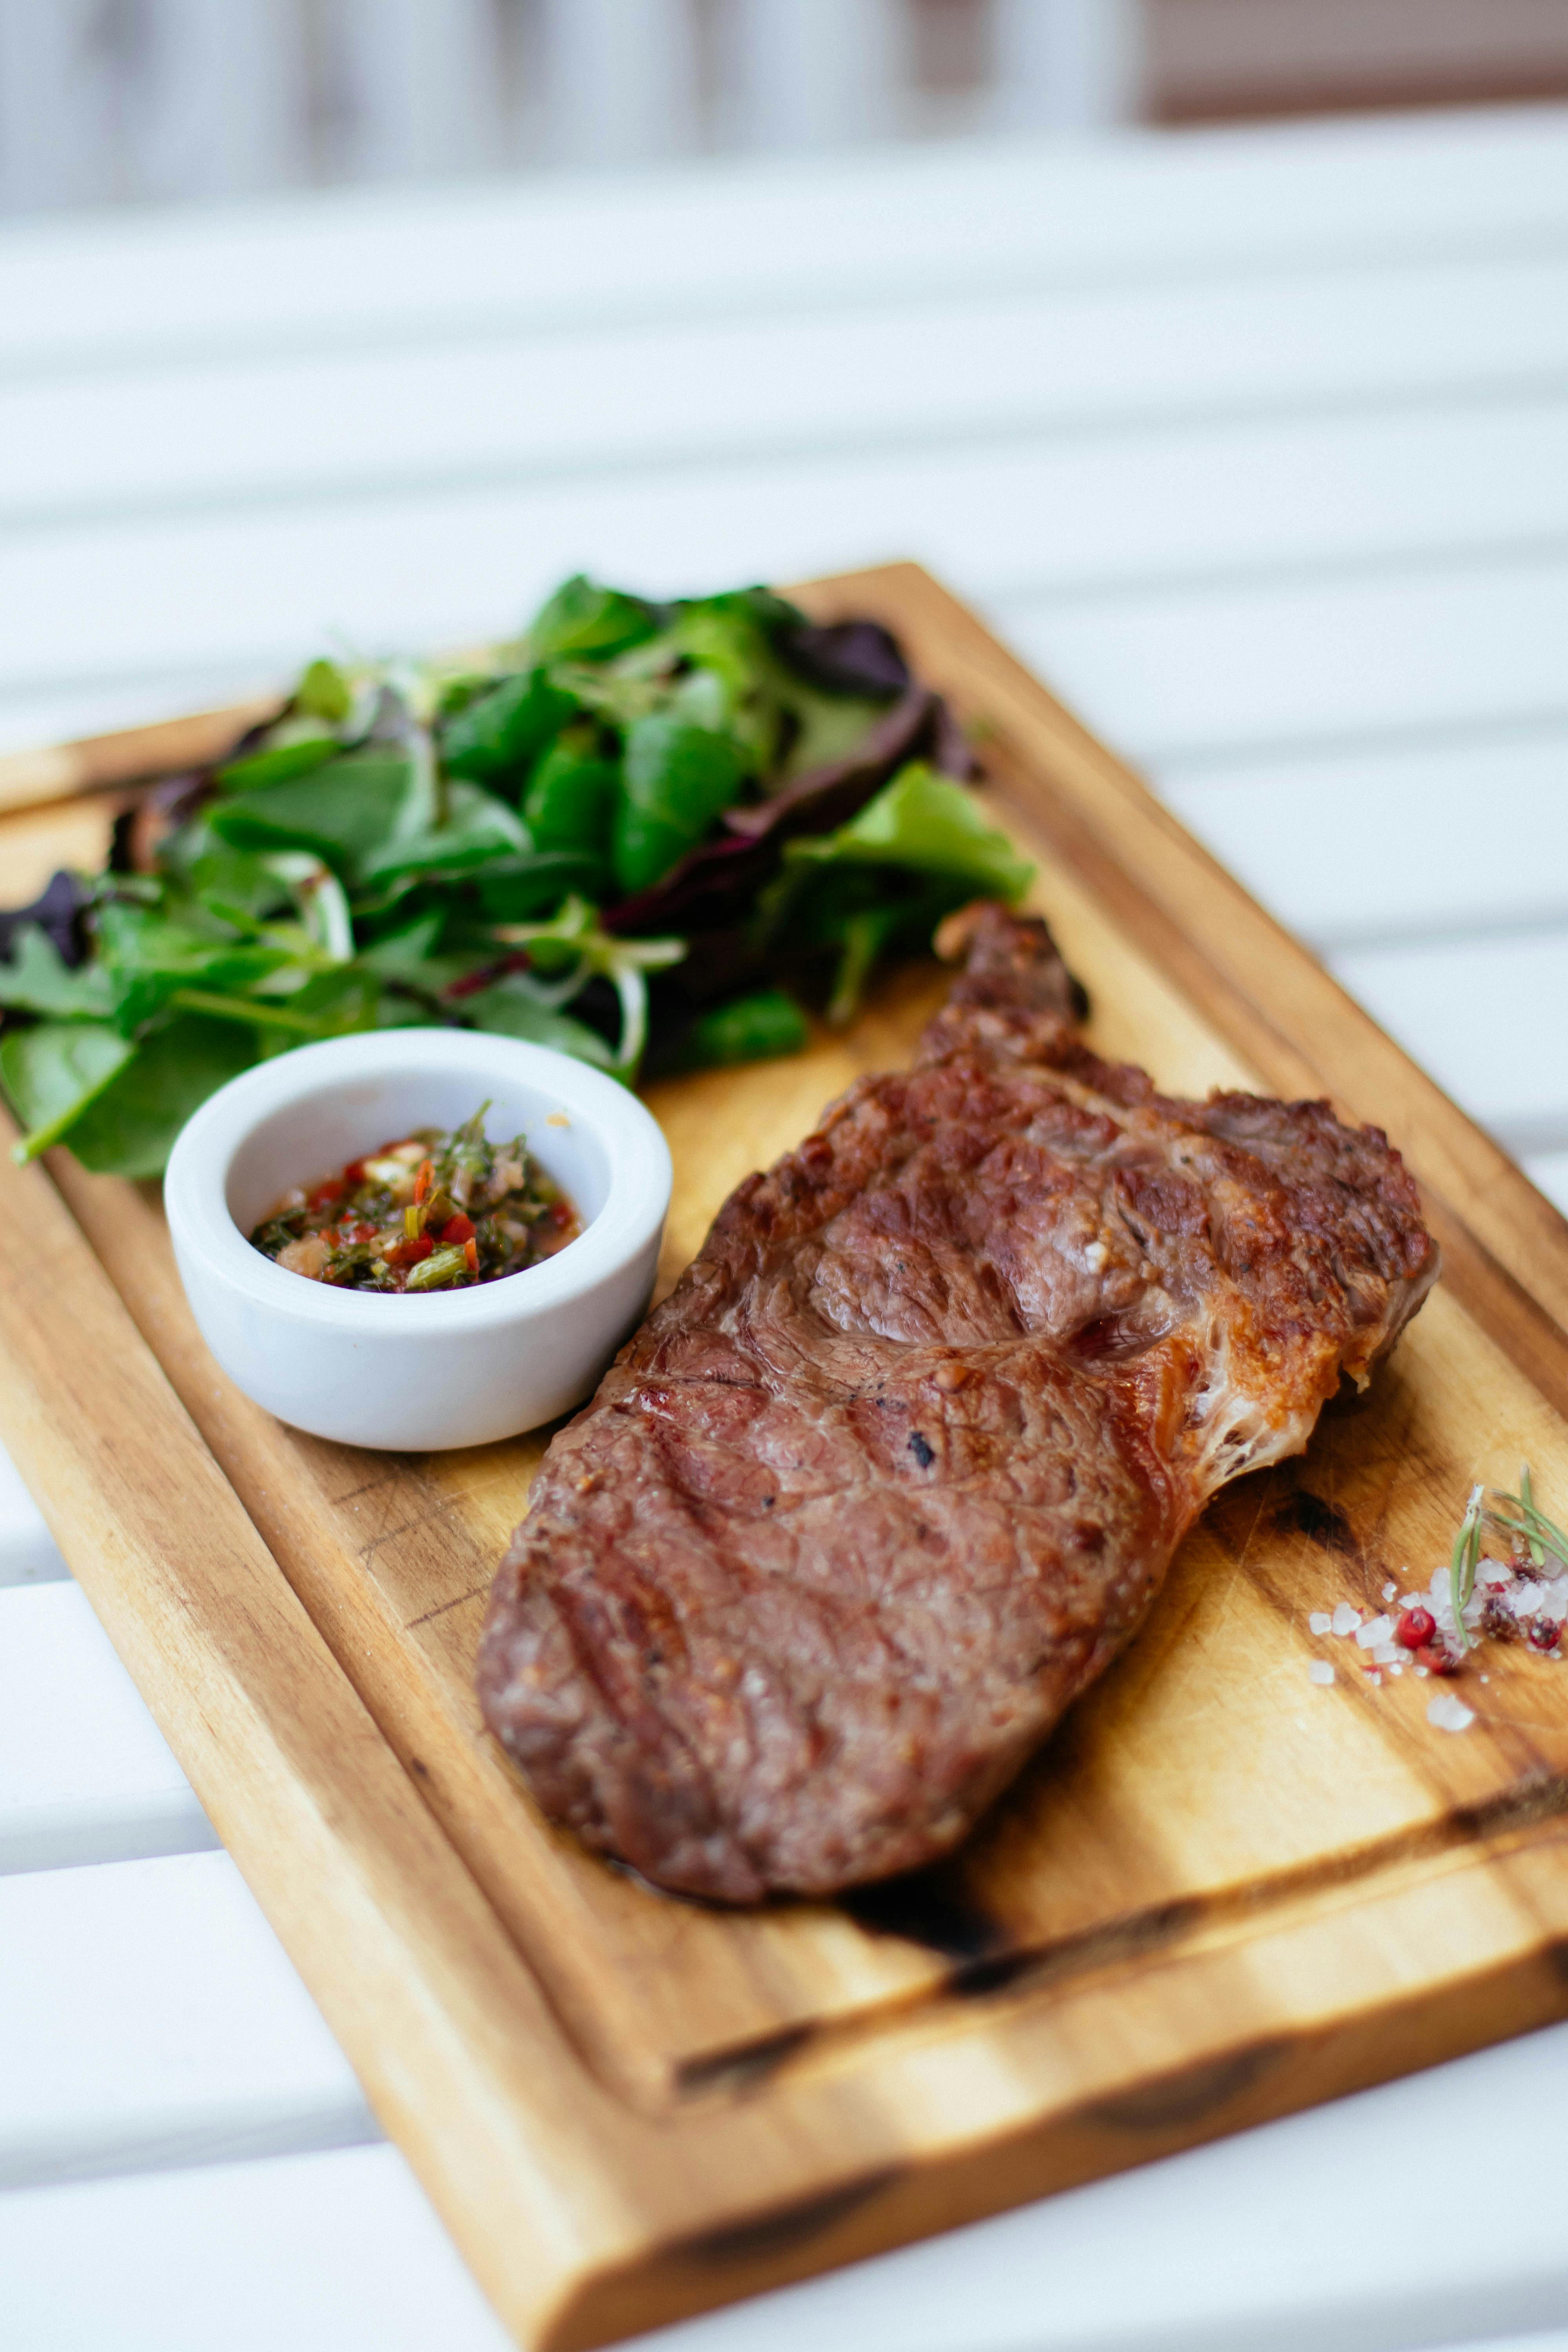 A steak dinner served on a wooden board | Source: Pexels